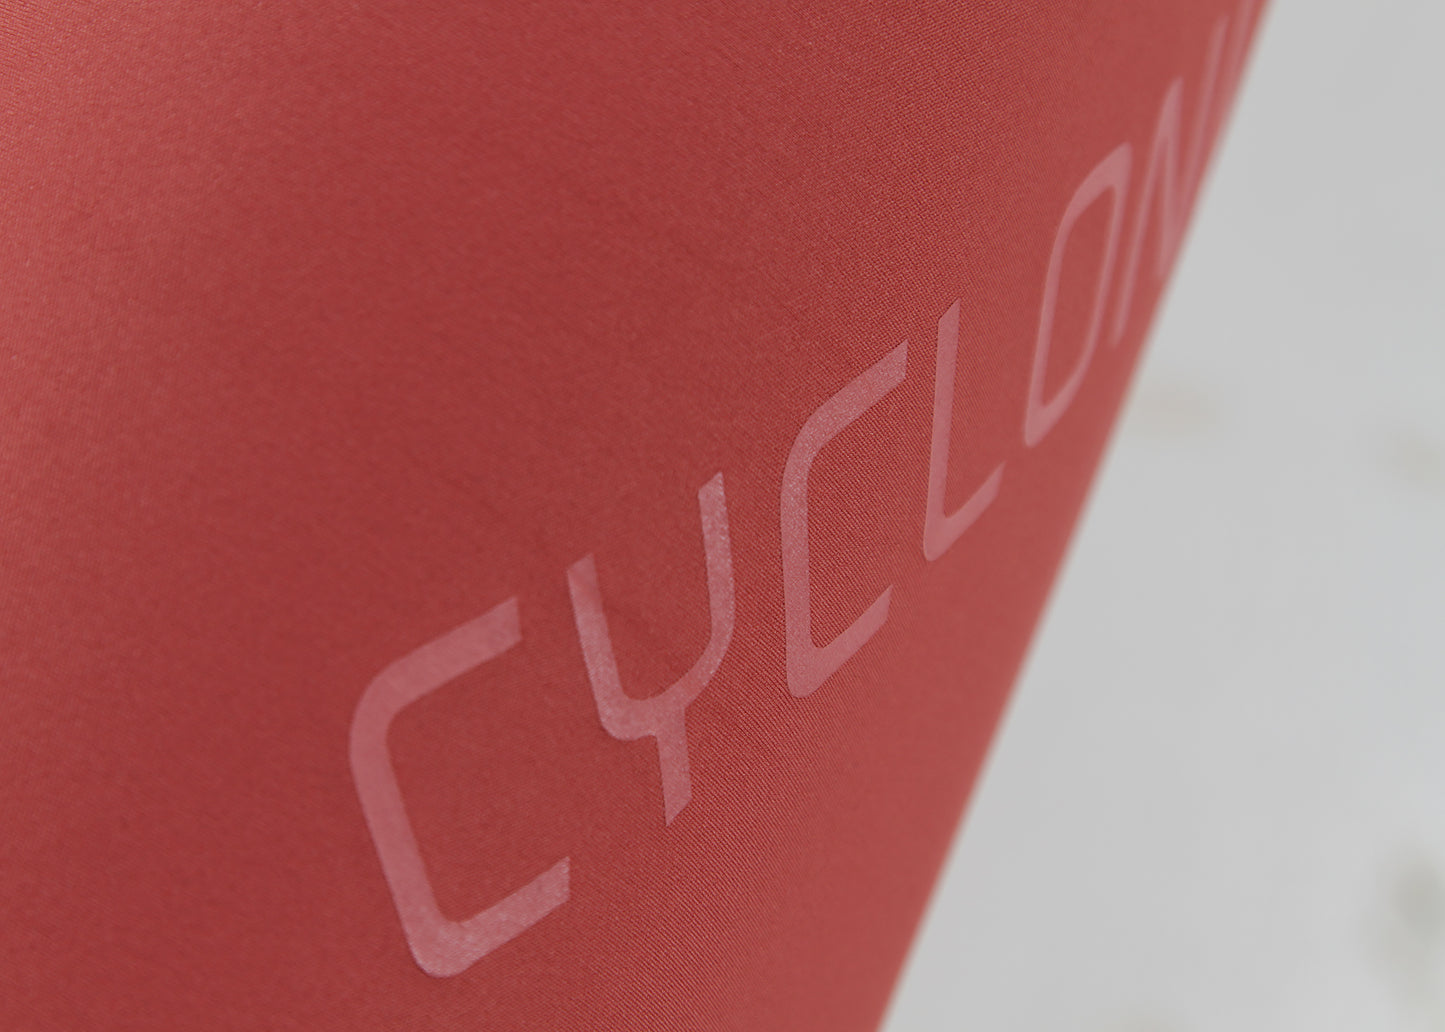 Cyclonus Chicane Seamless Cycling Bib Shorts - Navy Blue – Supreme Bikes PH